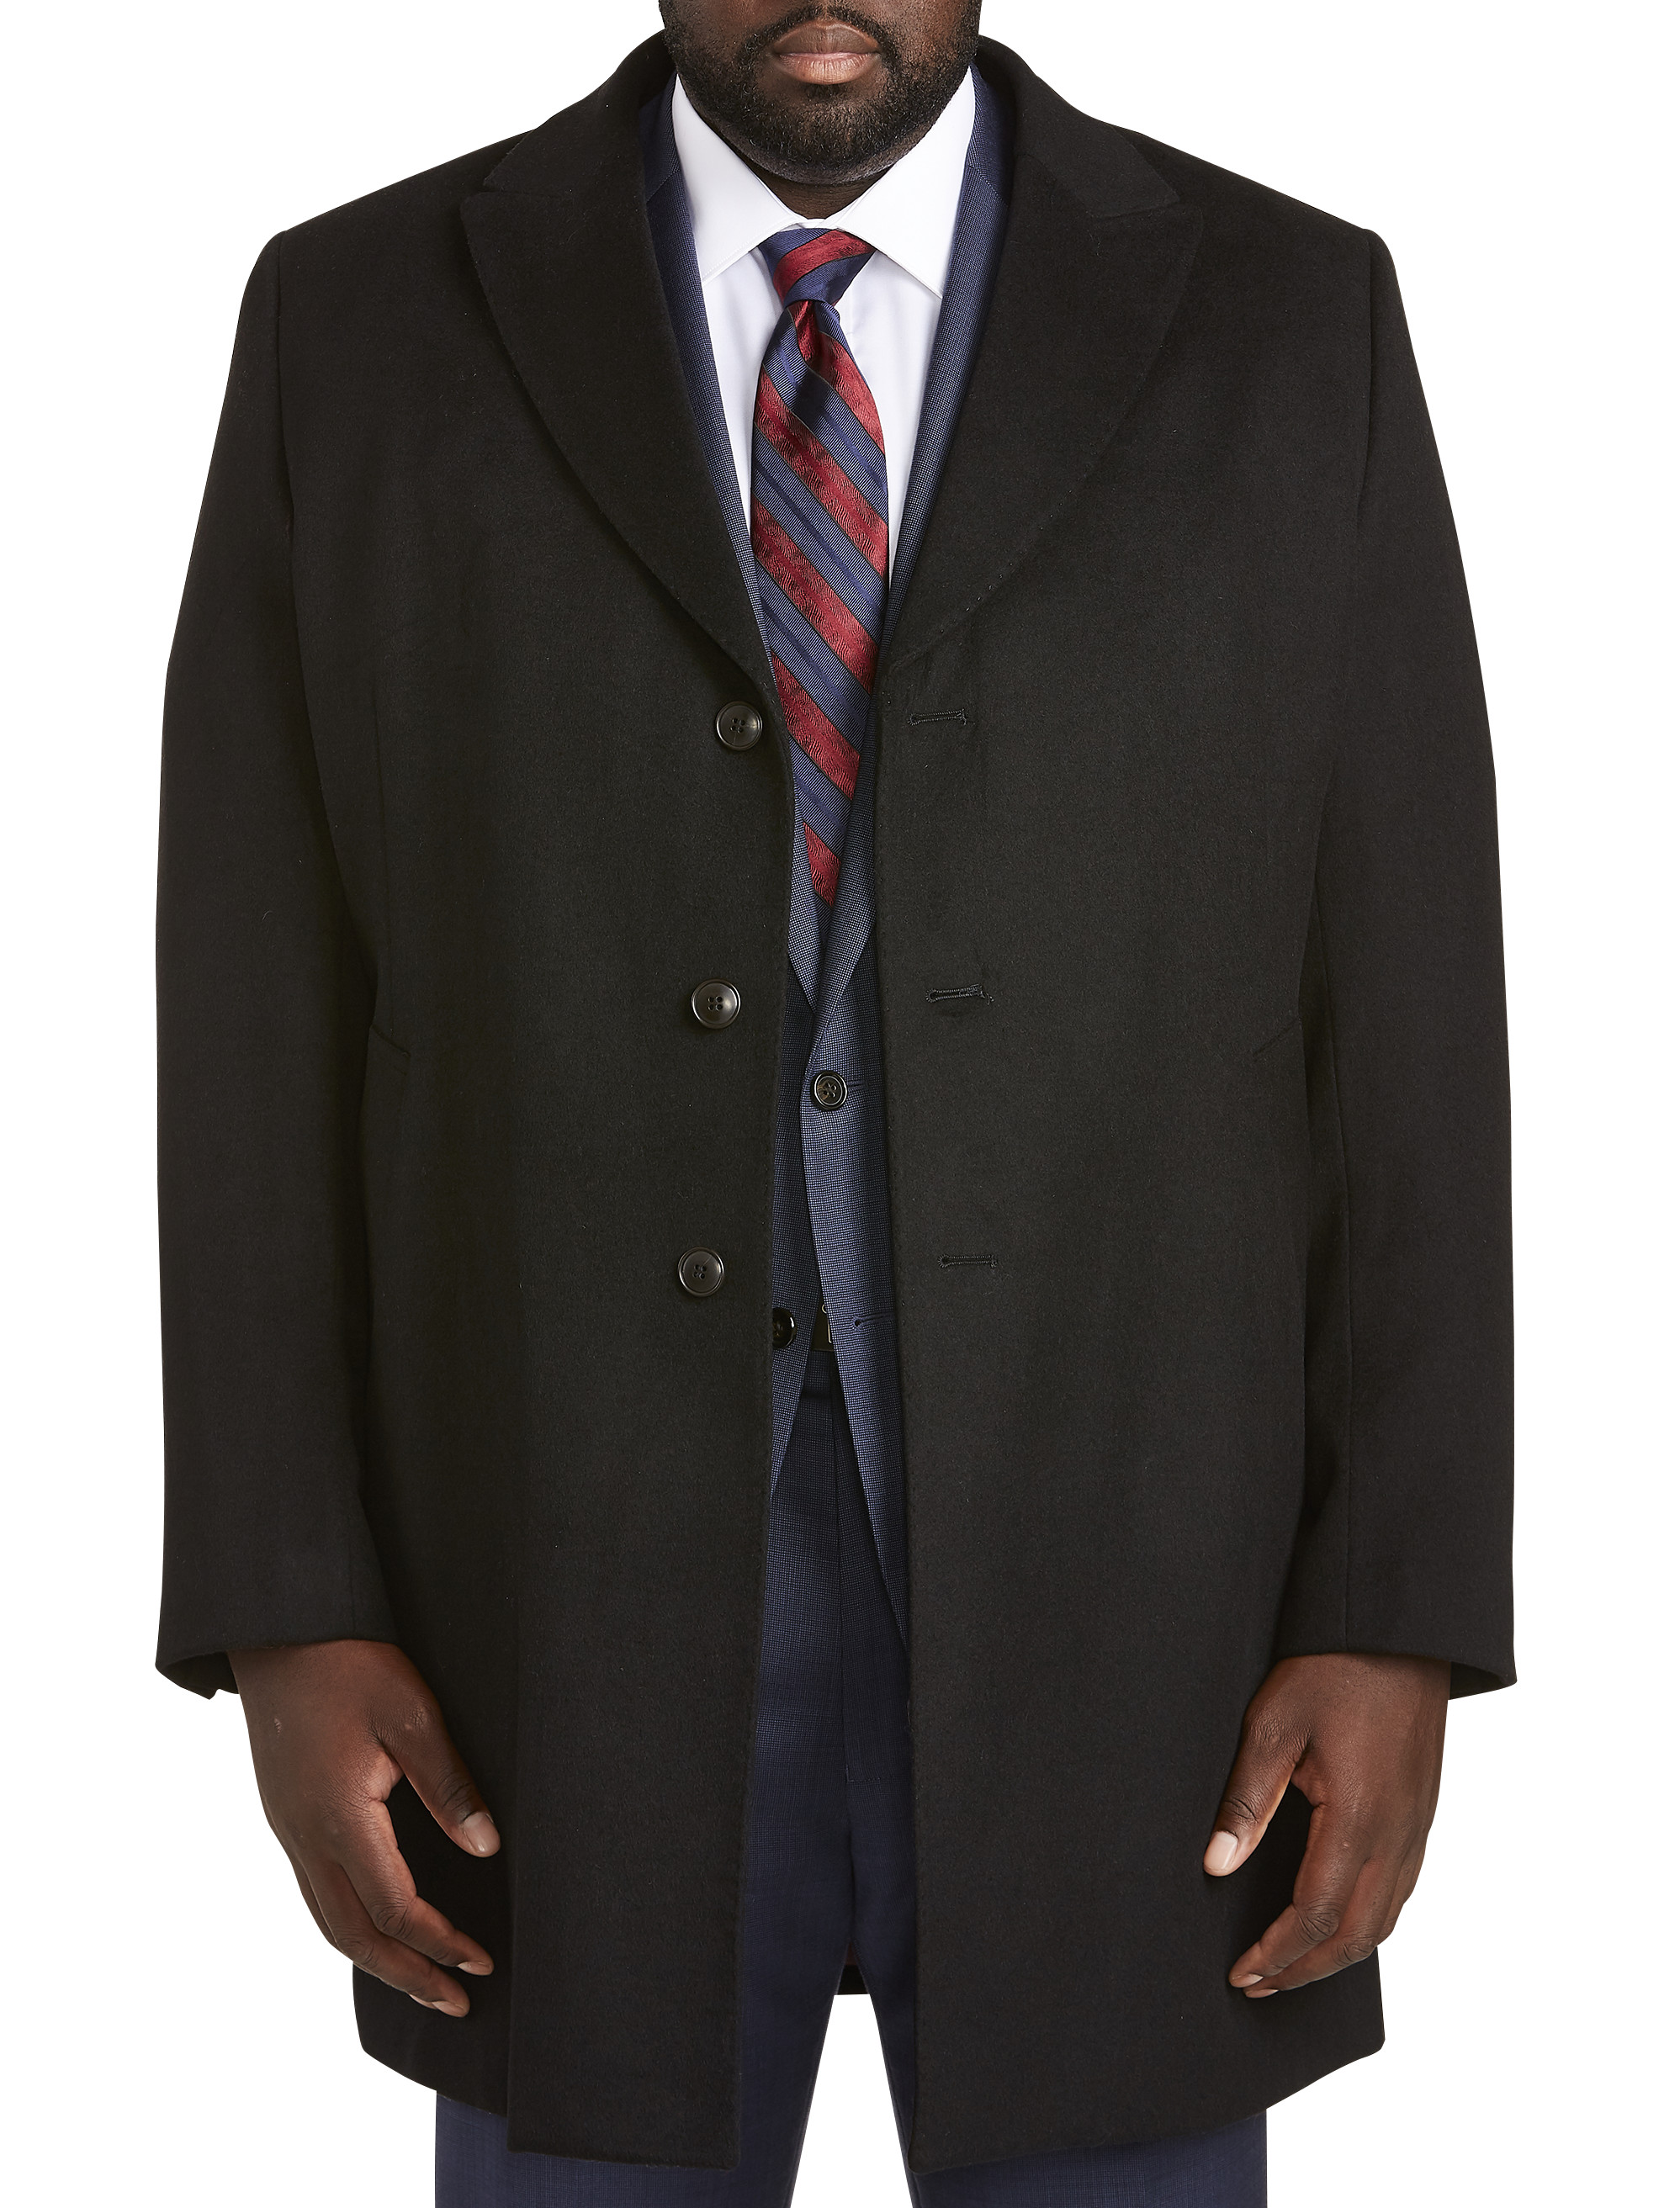 Big and Tall | Daniel Hechter Paris Overcoat | DXL Men's Clothing Store